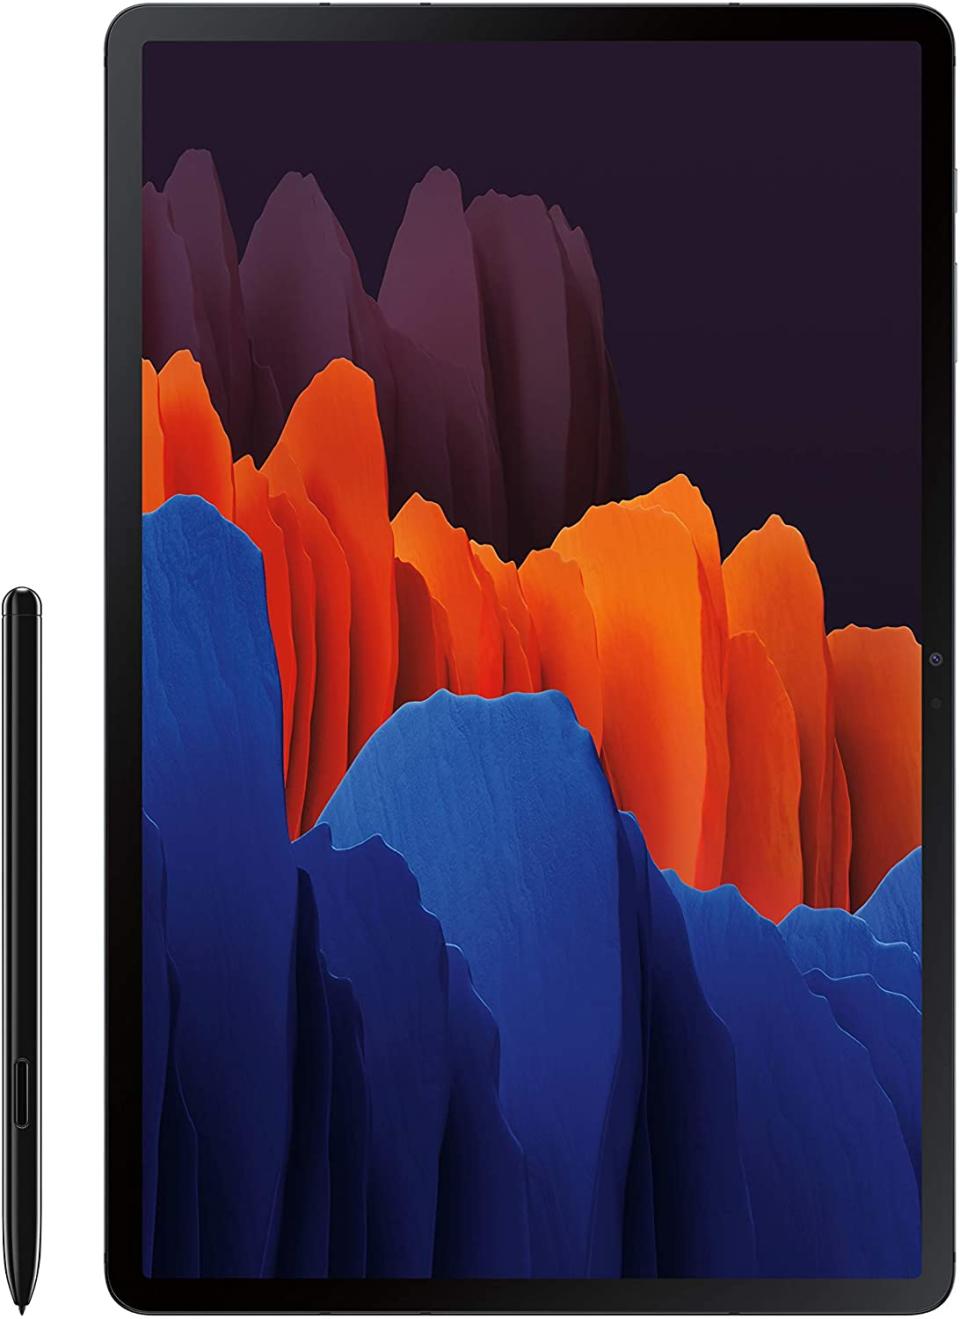 Samsung Galaxy Tab S7, best drawing tablet